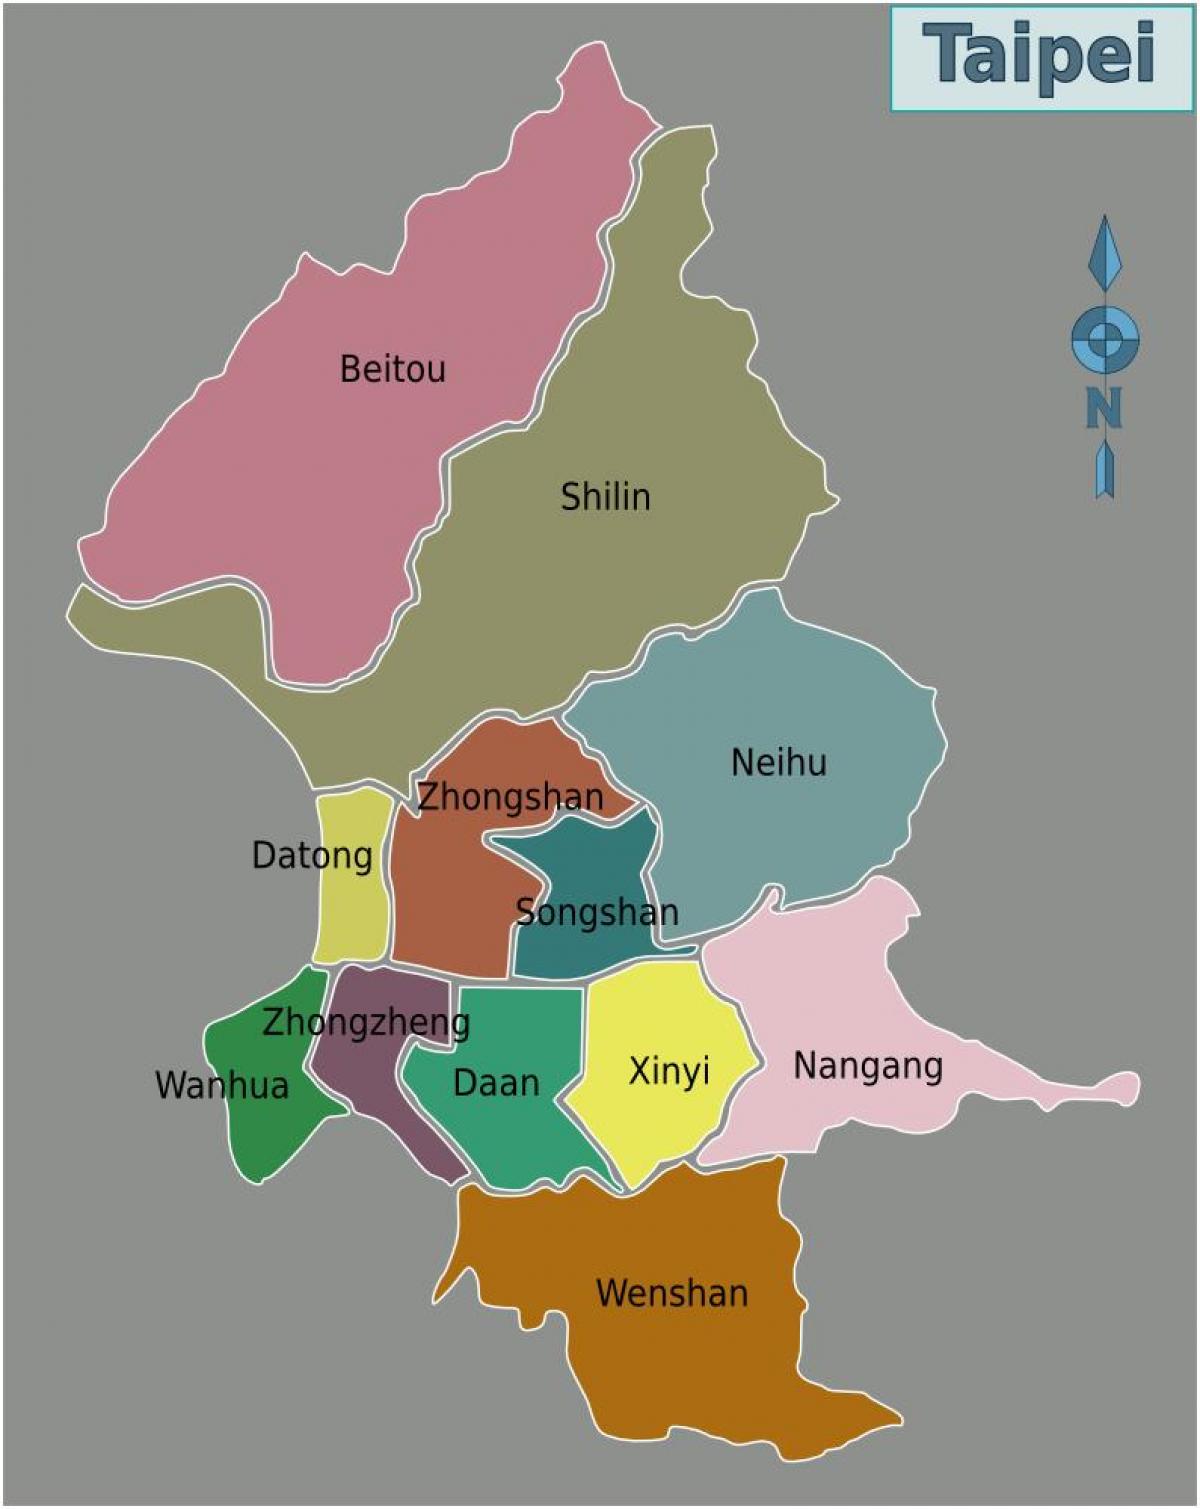 Taipei city district kaart